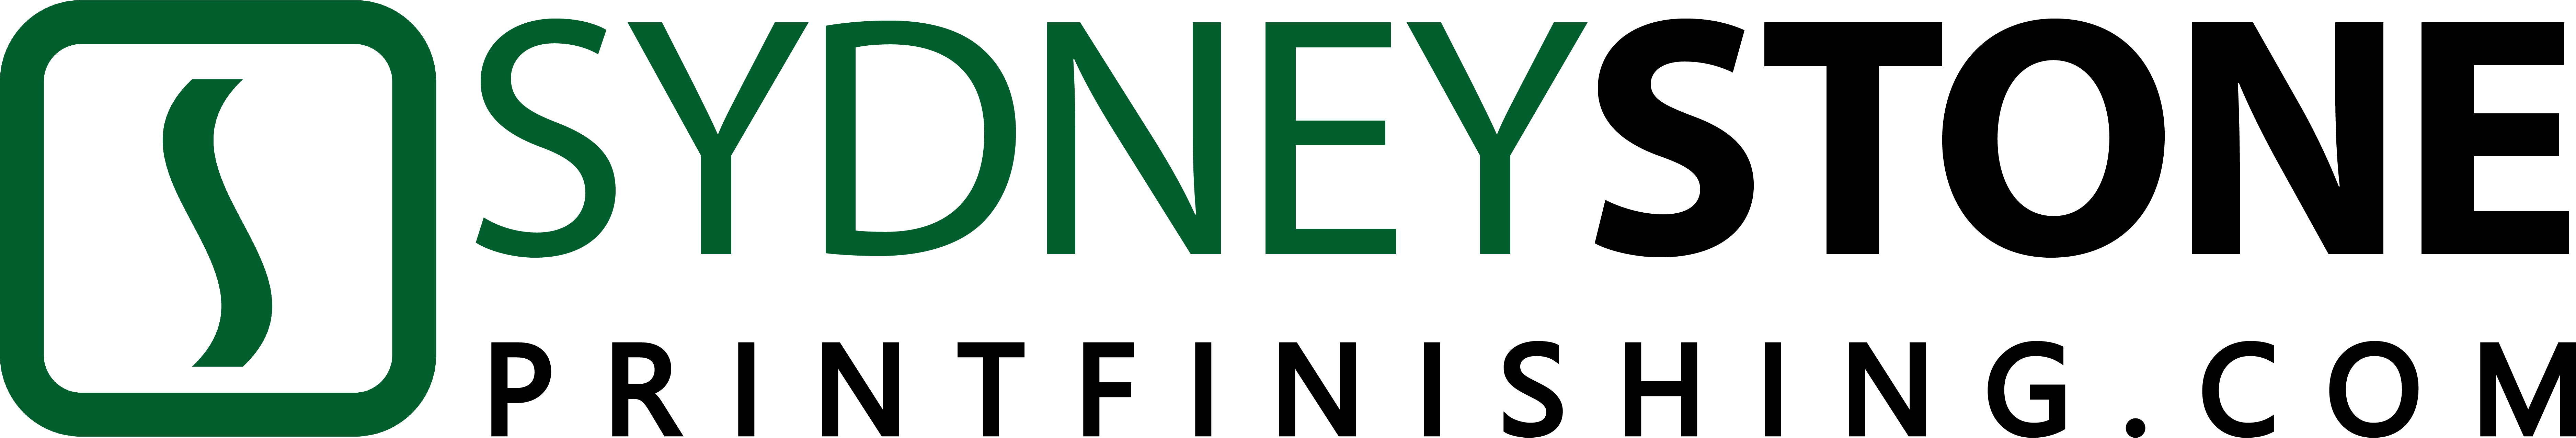 Sydney Stone Logo - Standard_7684x1621-1